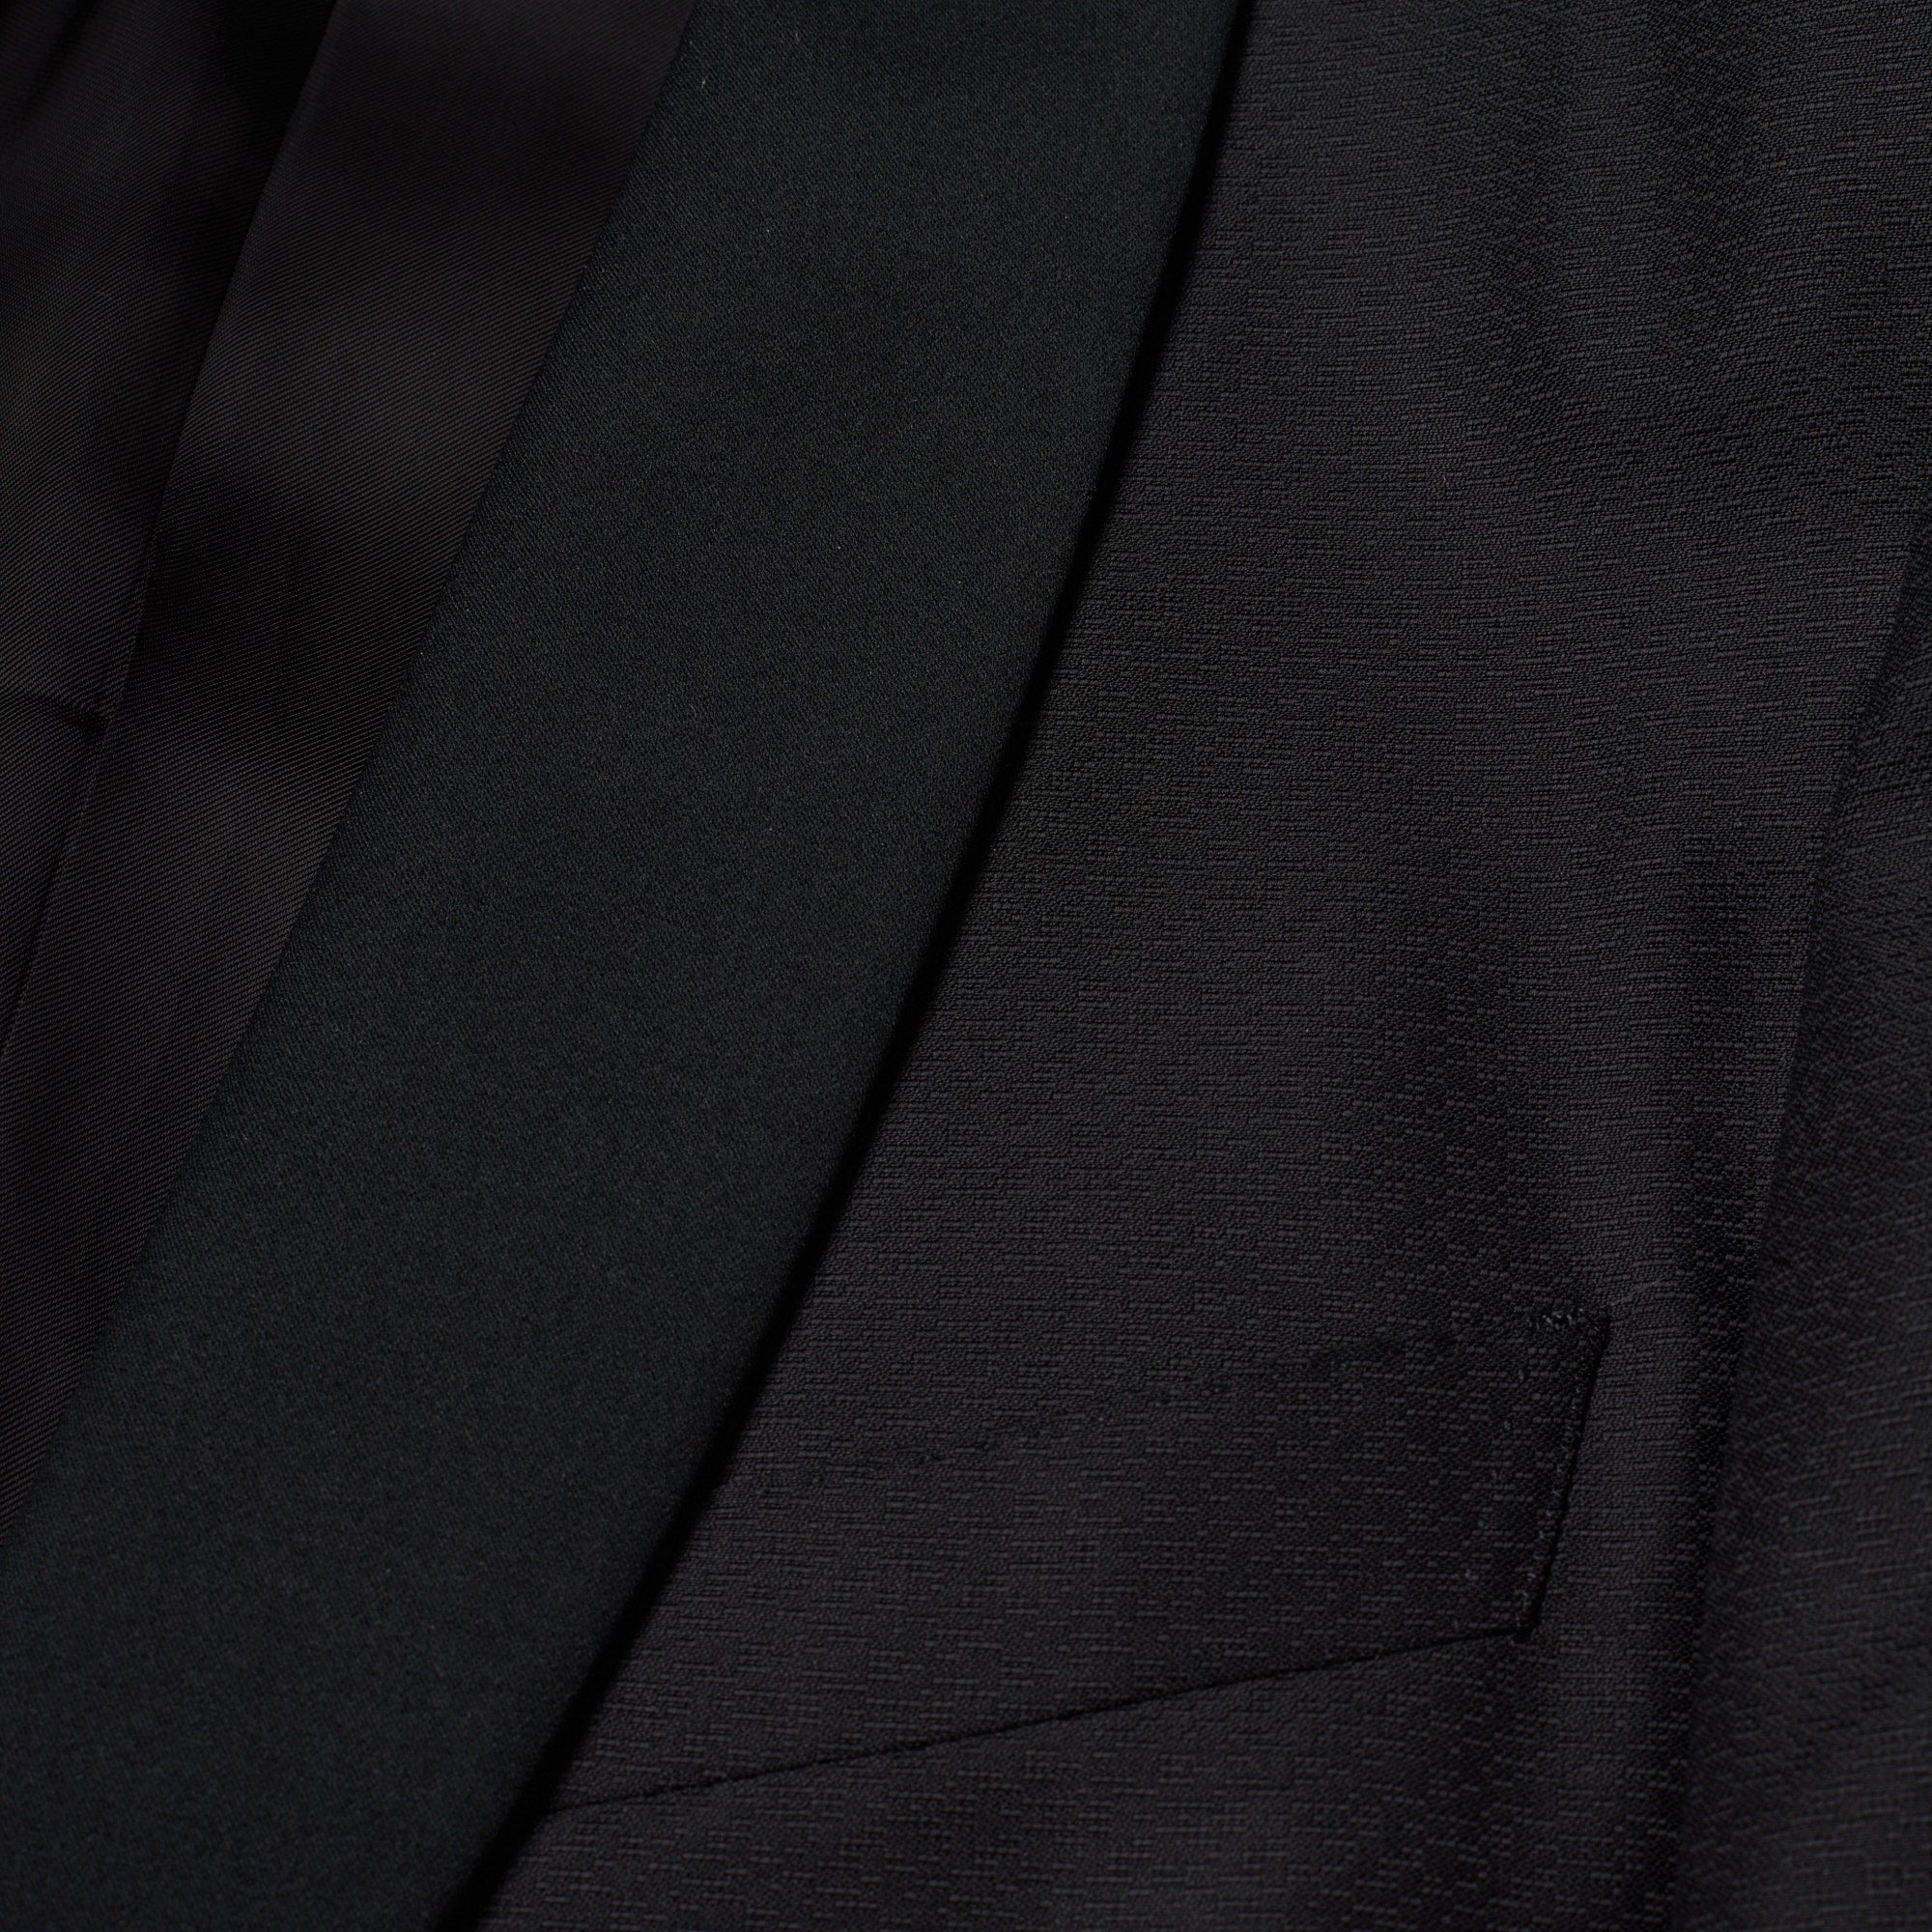 CANALI 1934 Black Jacquard Patterned Wool 3 Piece Shawl Collar Formal Suit EU 50 US 40 CANALI